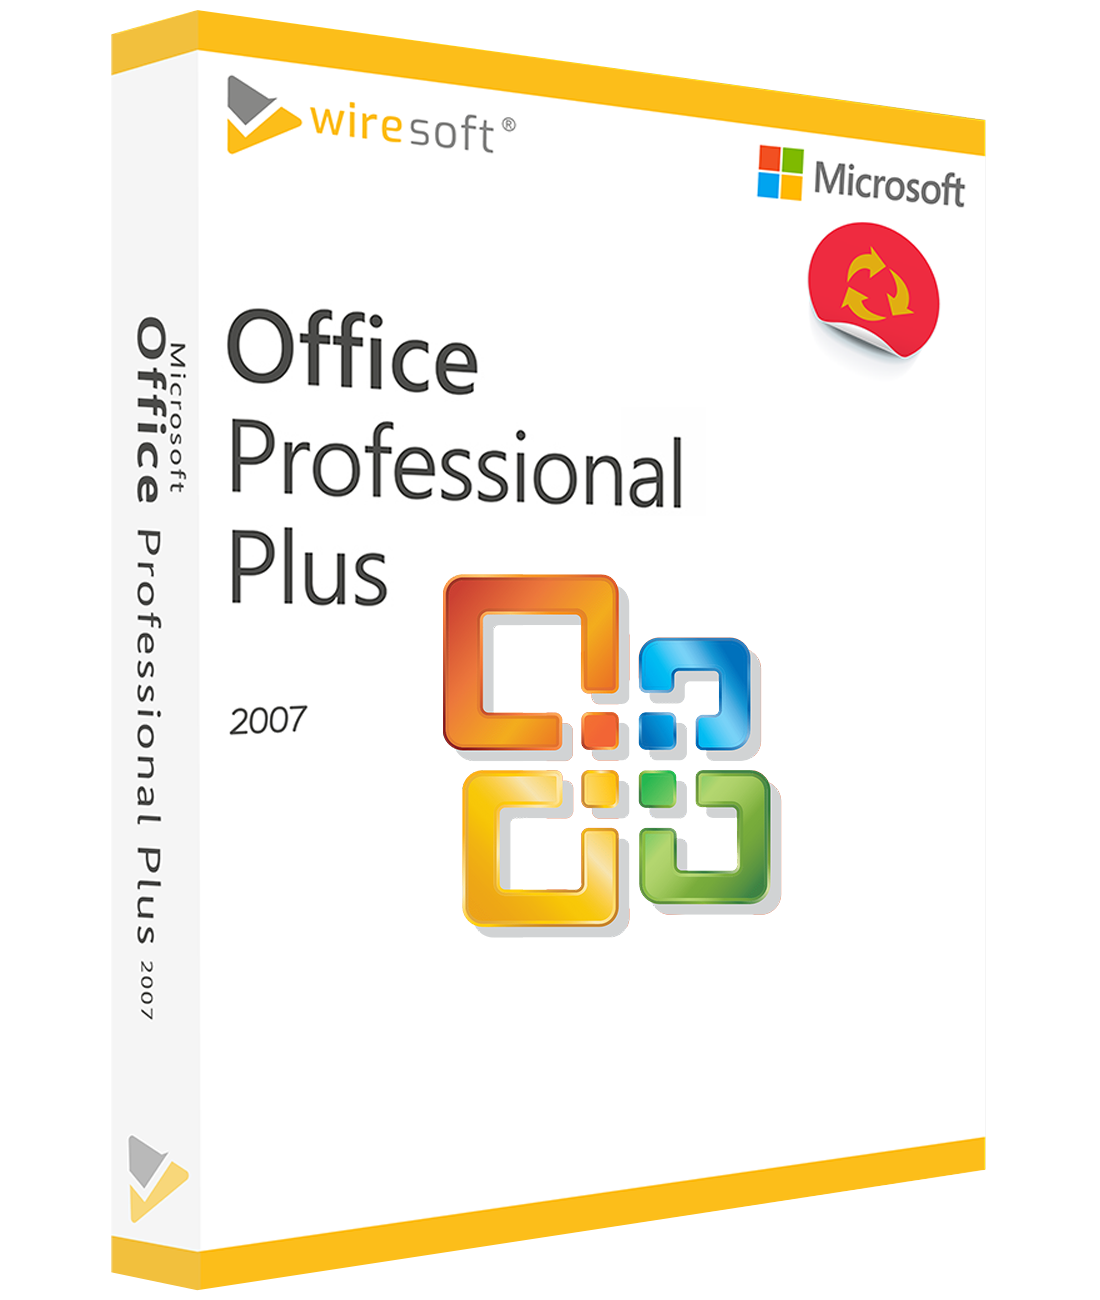 Office 2007 Microsoft Office para Windows Office | Software Shop Wiresoft -  compra de licencias online